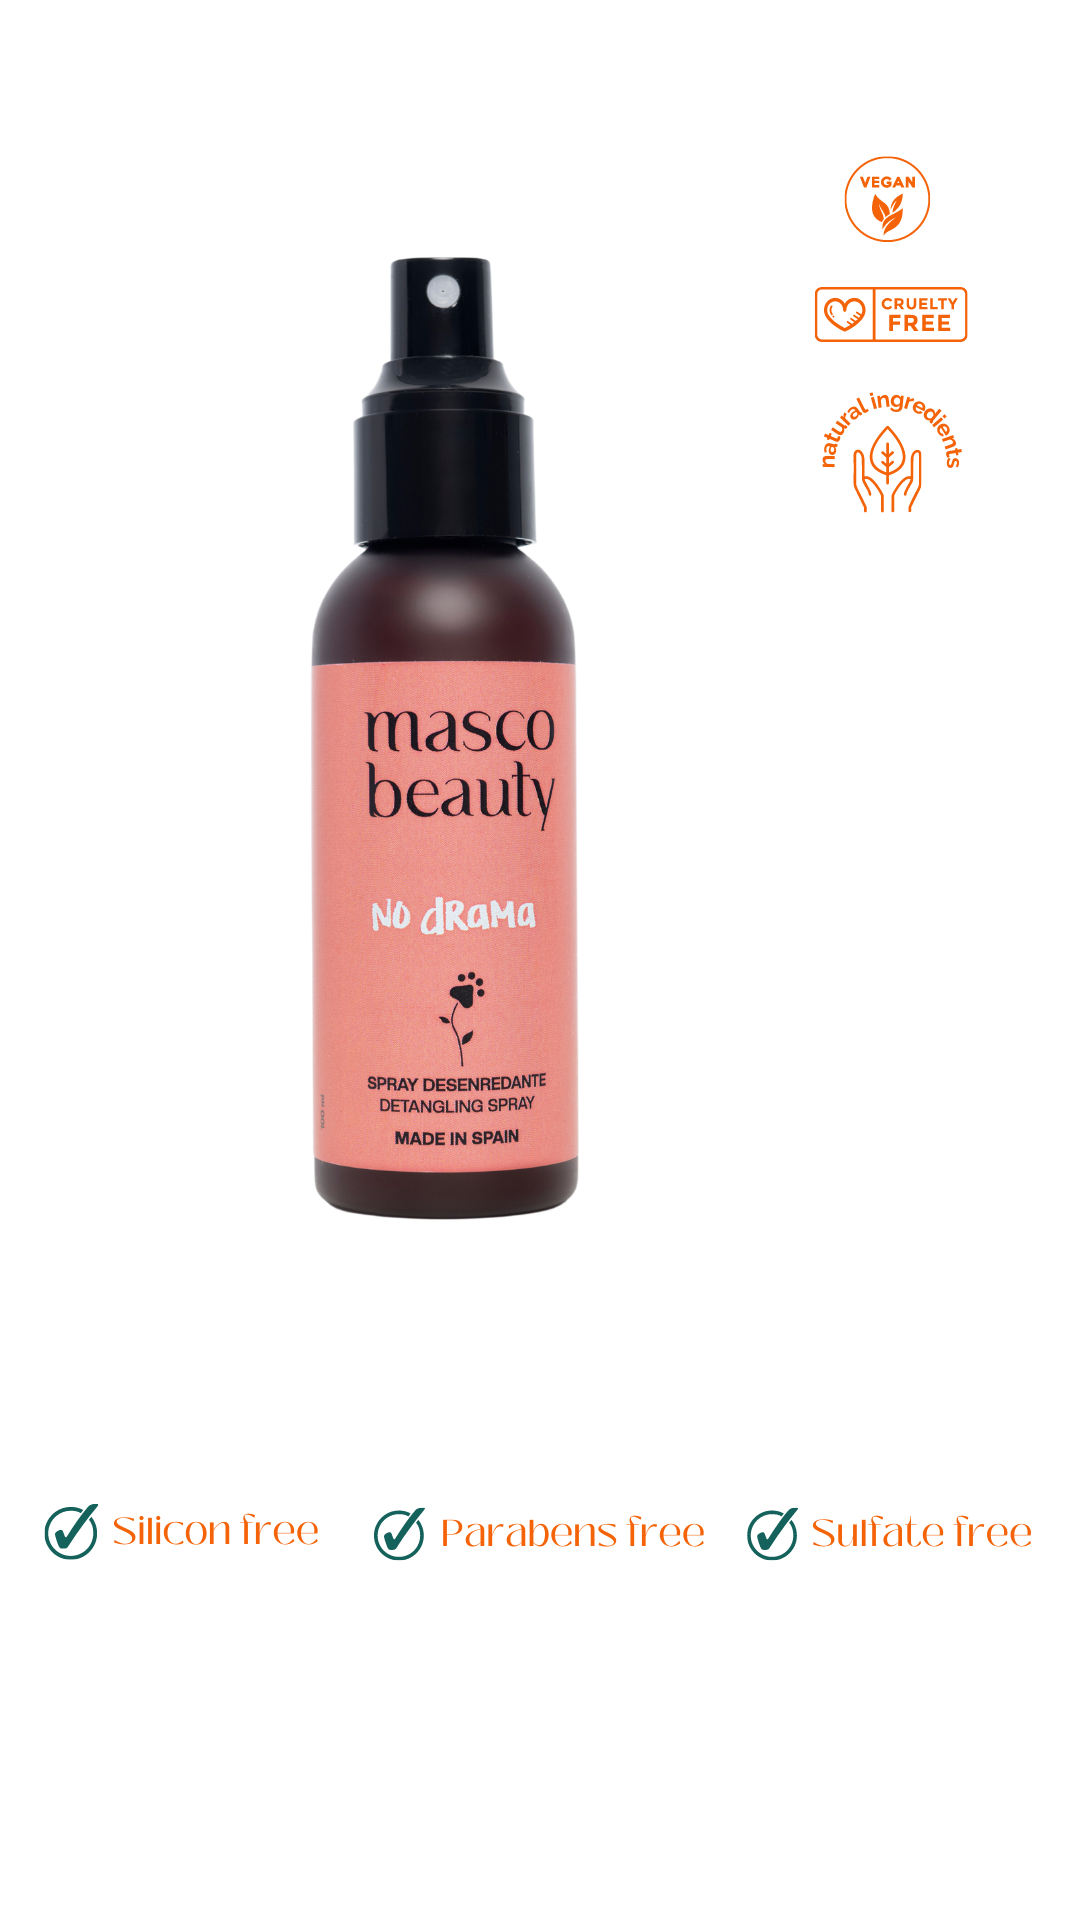 No drama detangling spray | Masco beauty